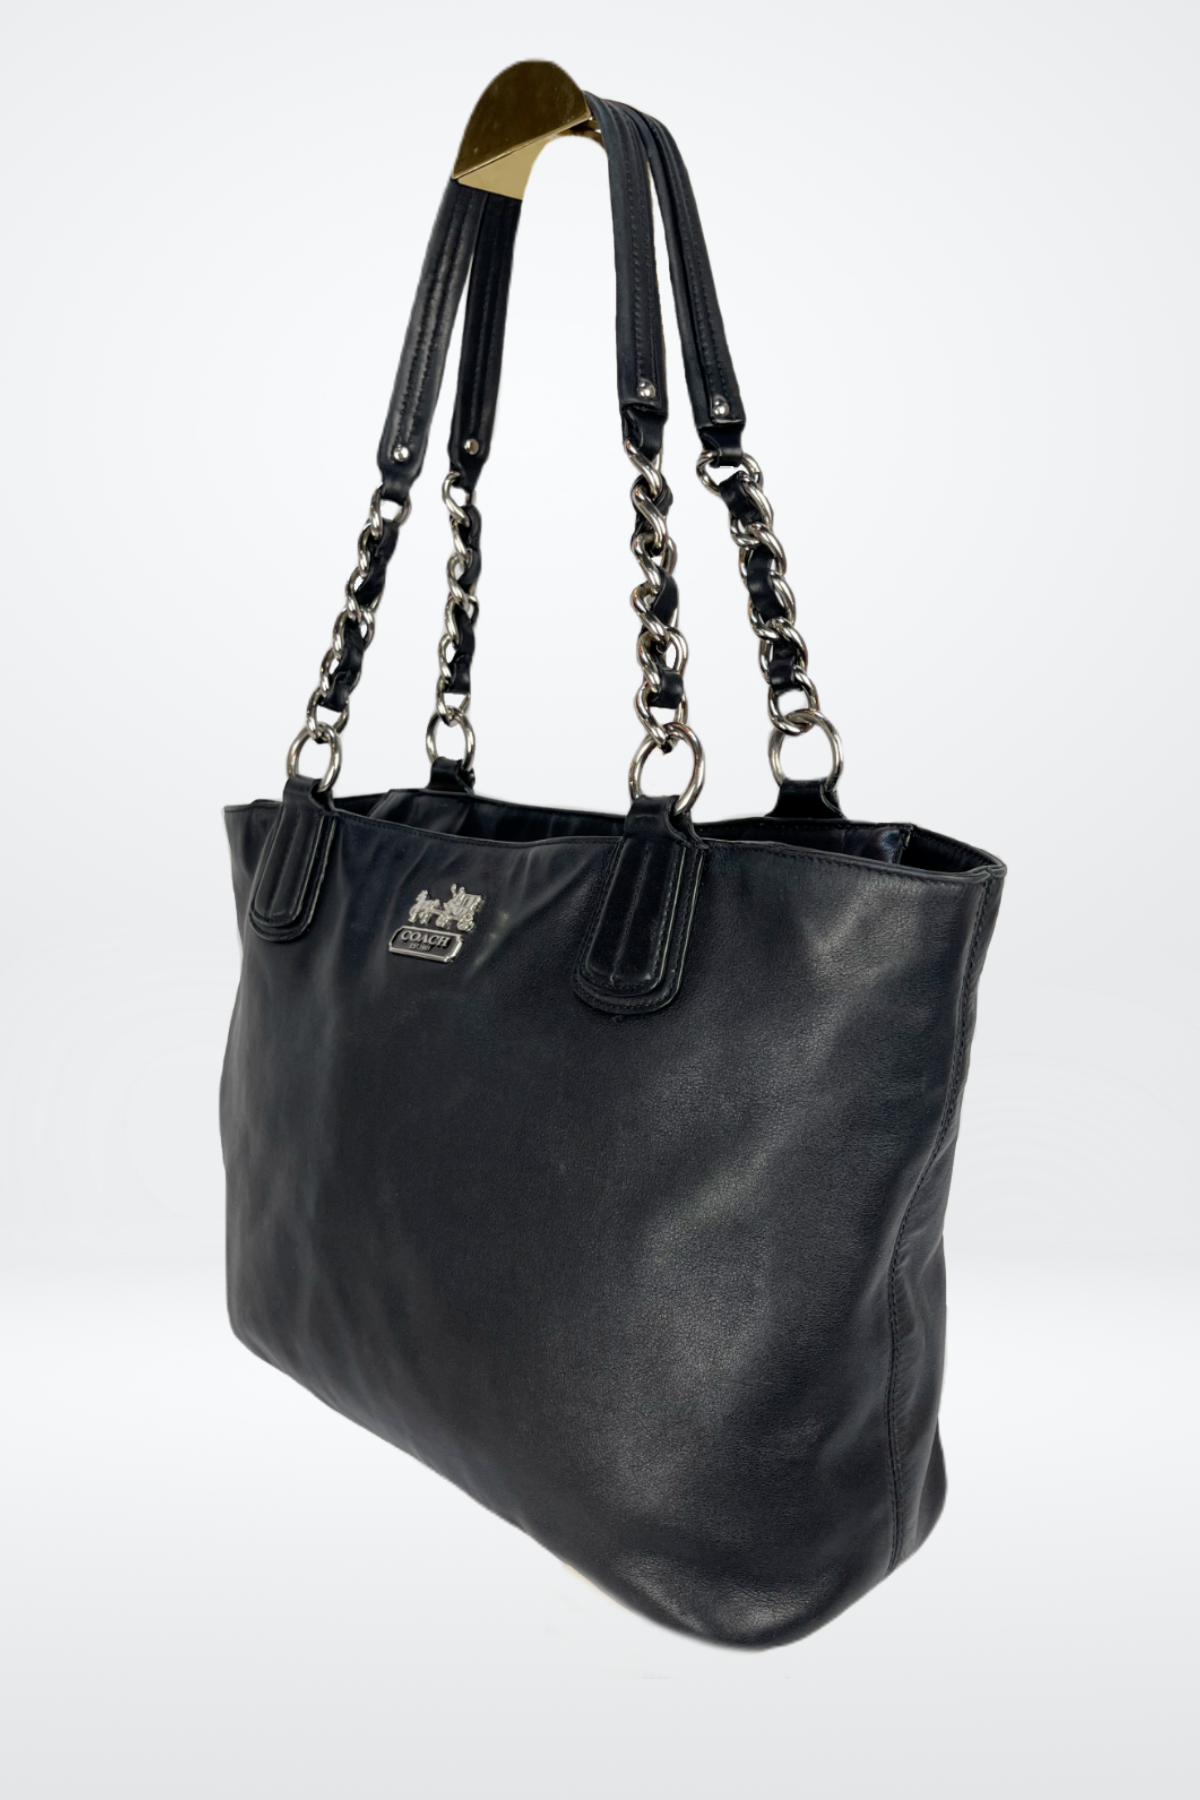 PopBae Women's Soft Leather Shoulder Bag With Chain Strap Flap Top Satchel  Handbag In Black | POPBAE